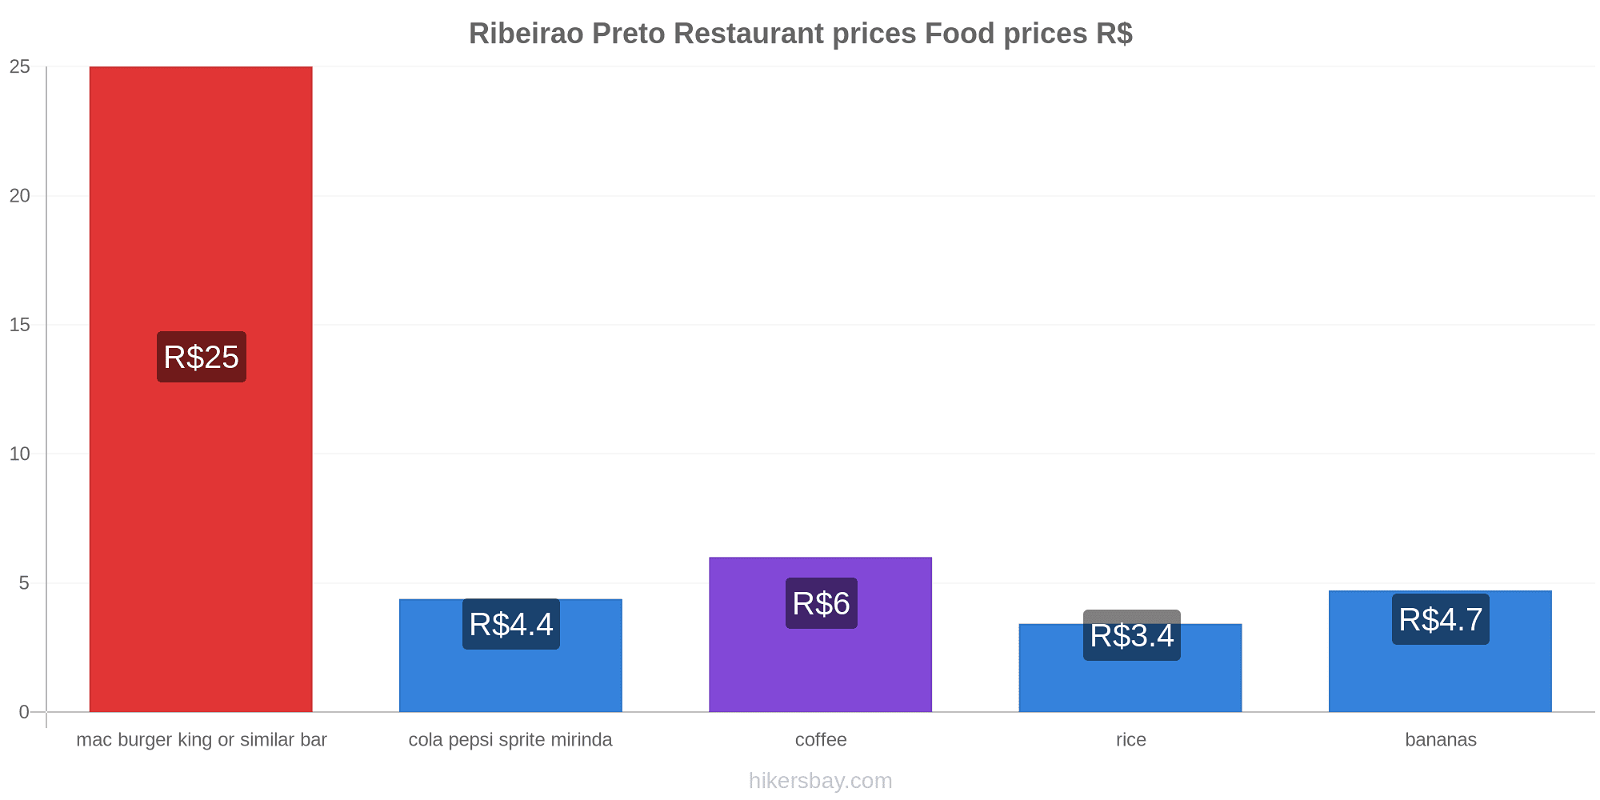 Ribeirao Preto price changes hikersbay.com